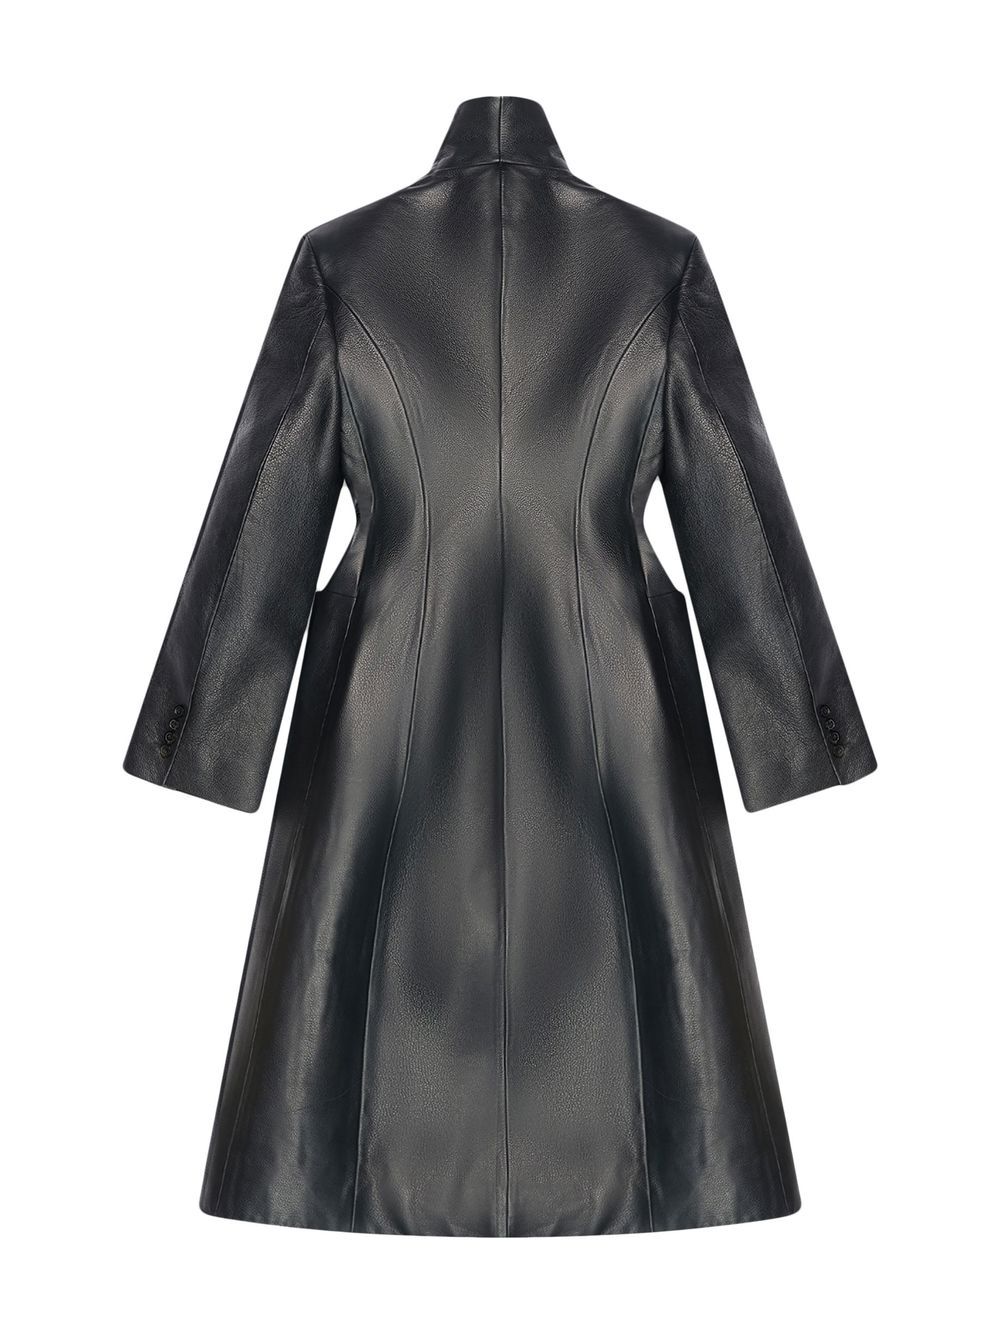 Balenciaga fitted-waistline Leather Coat - Farfetch